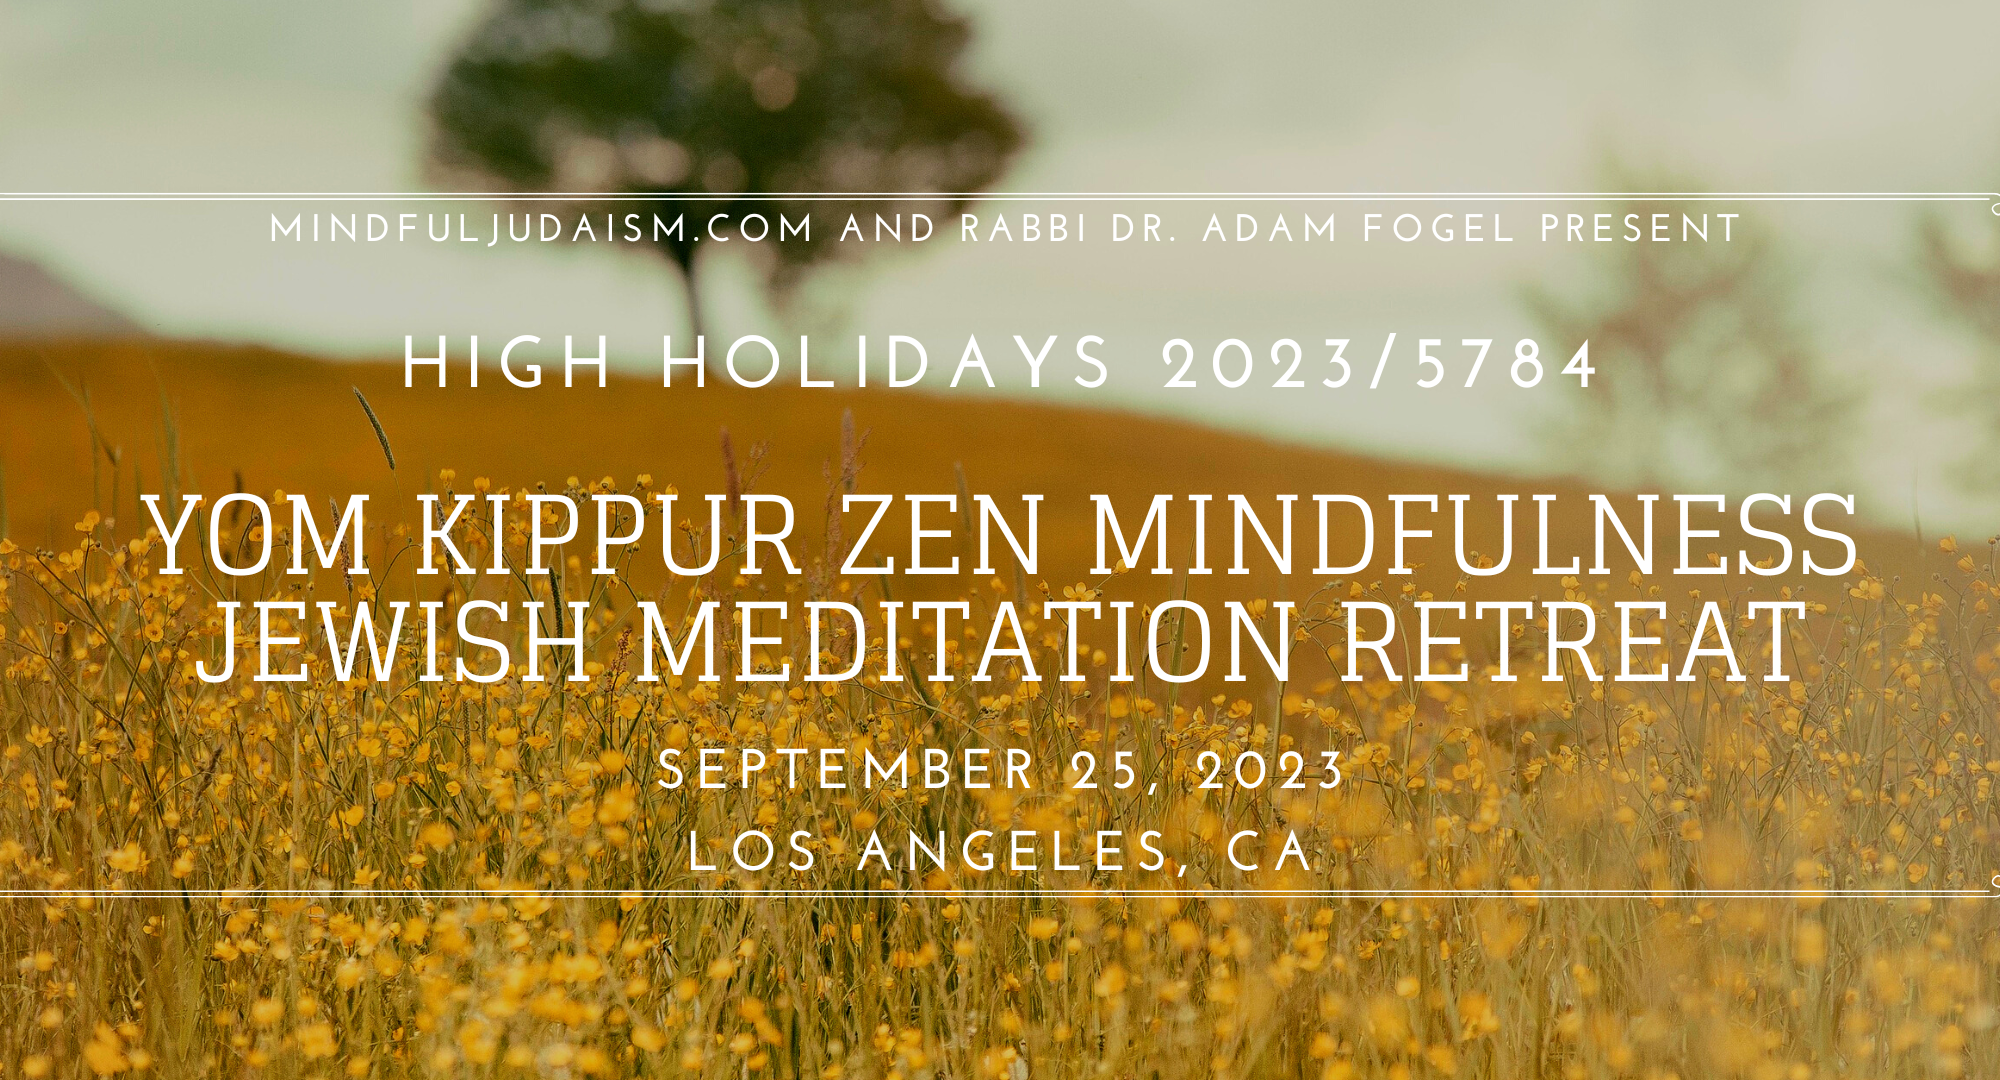 High Holidays 2023 - Yom Kippur Zen Mindfulness Jewish Meditation Retreat